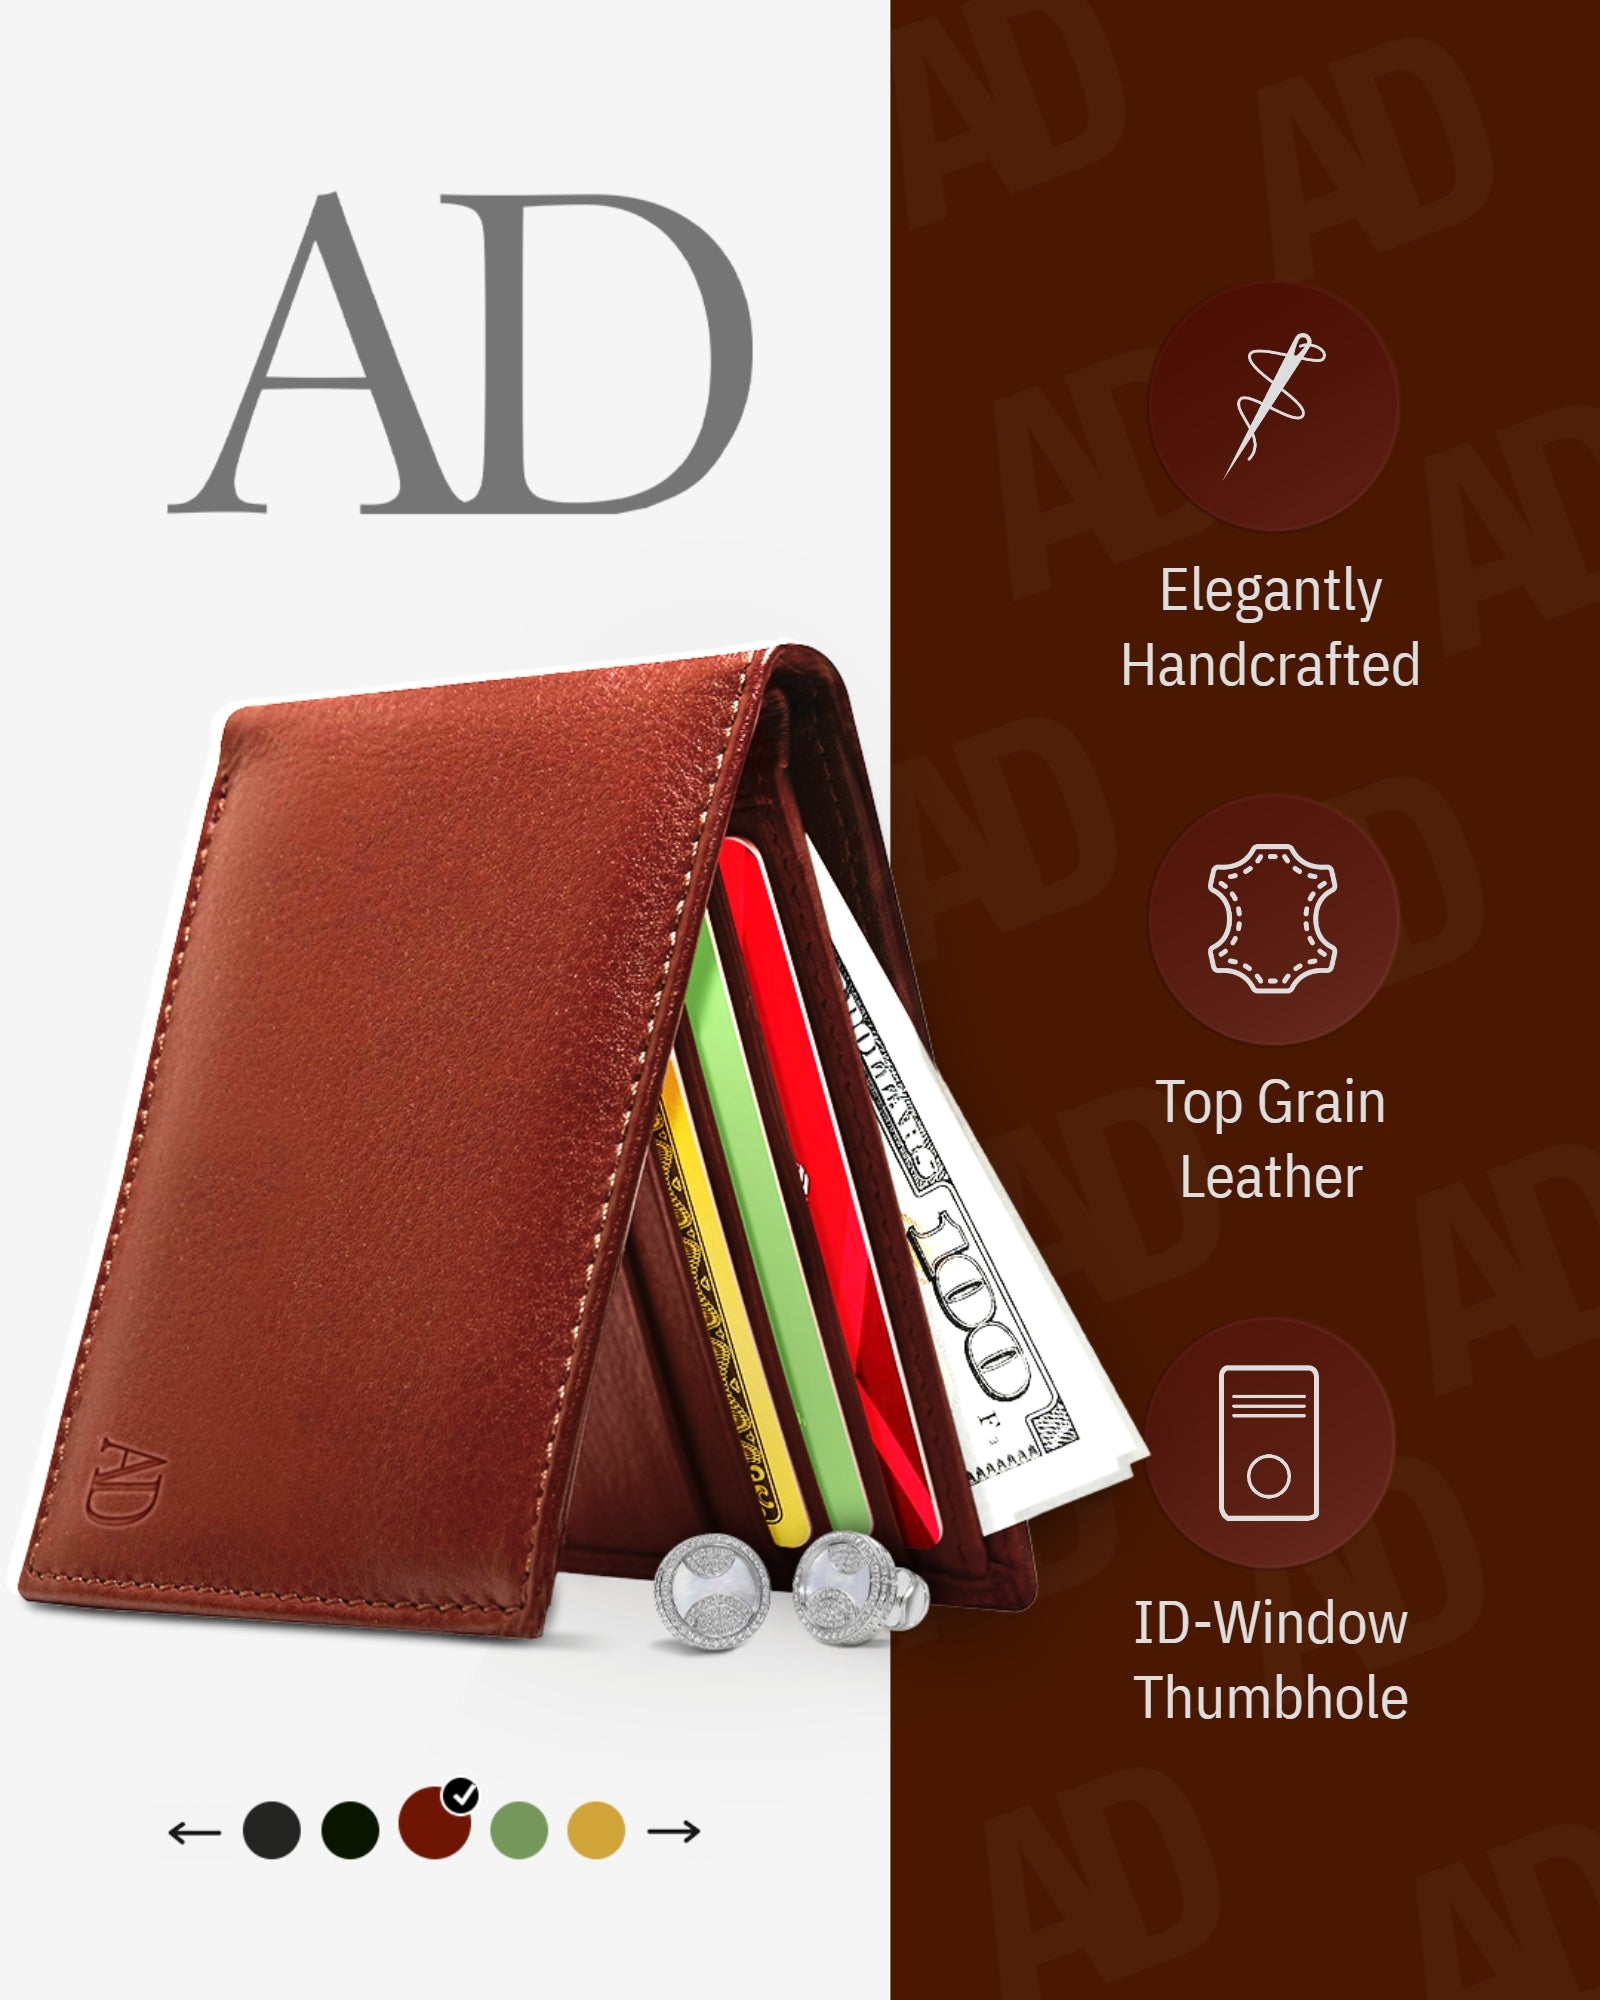  ManChDa Genuine Leather Wallet Slim RFID Blocking